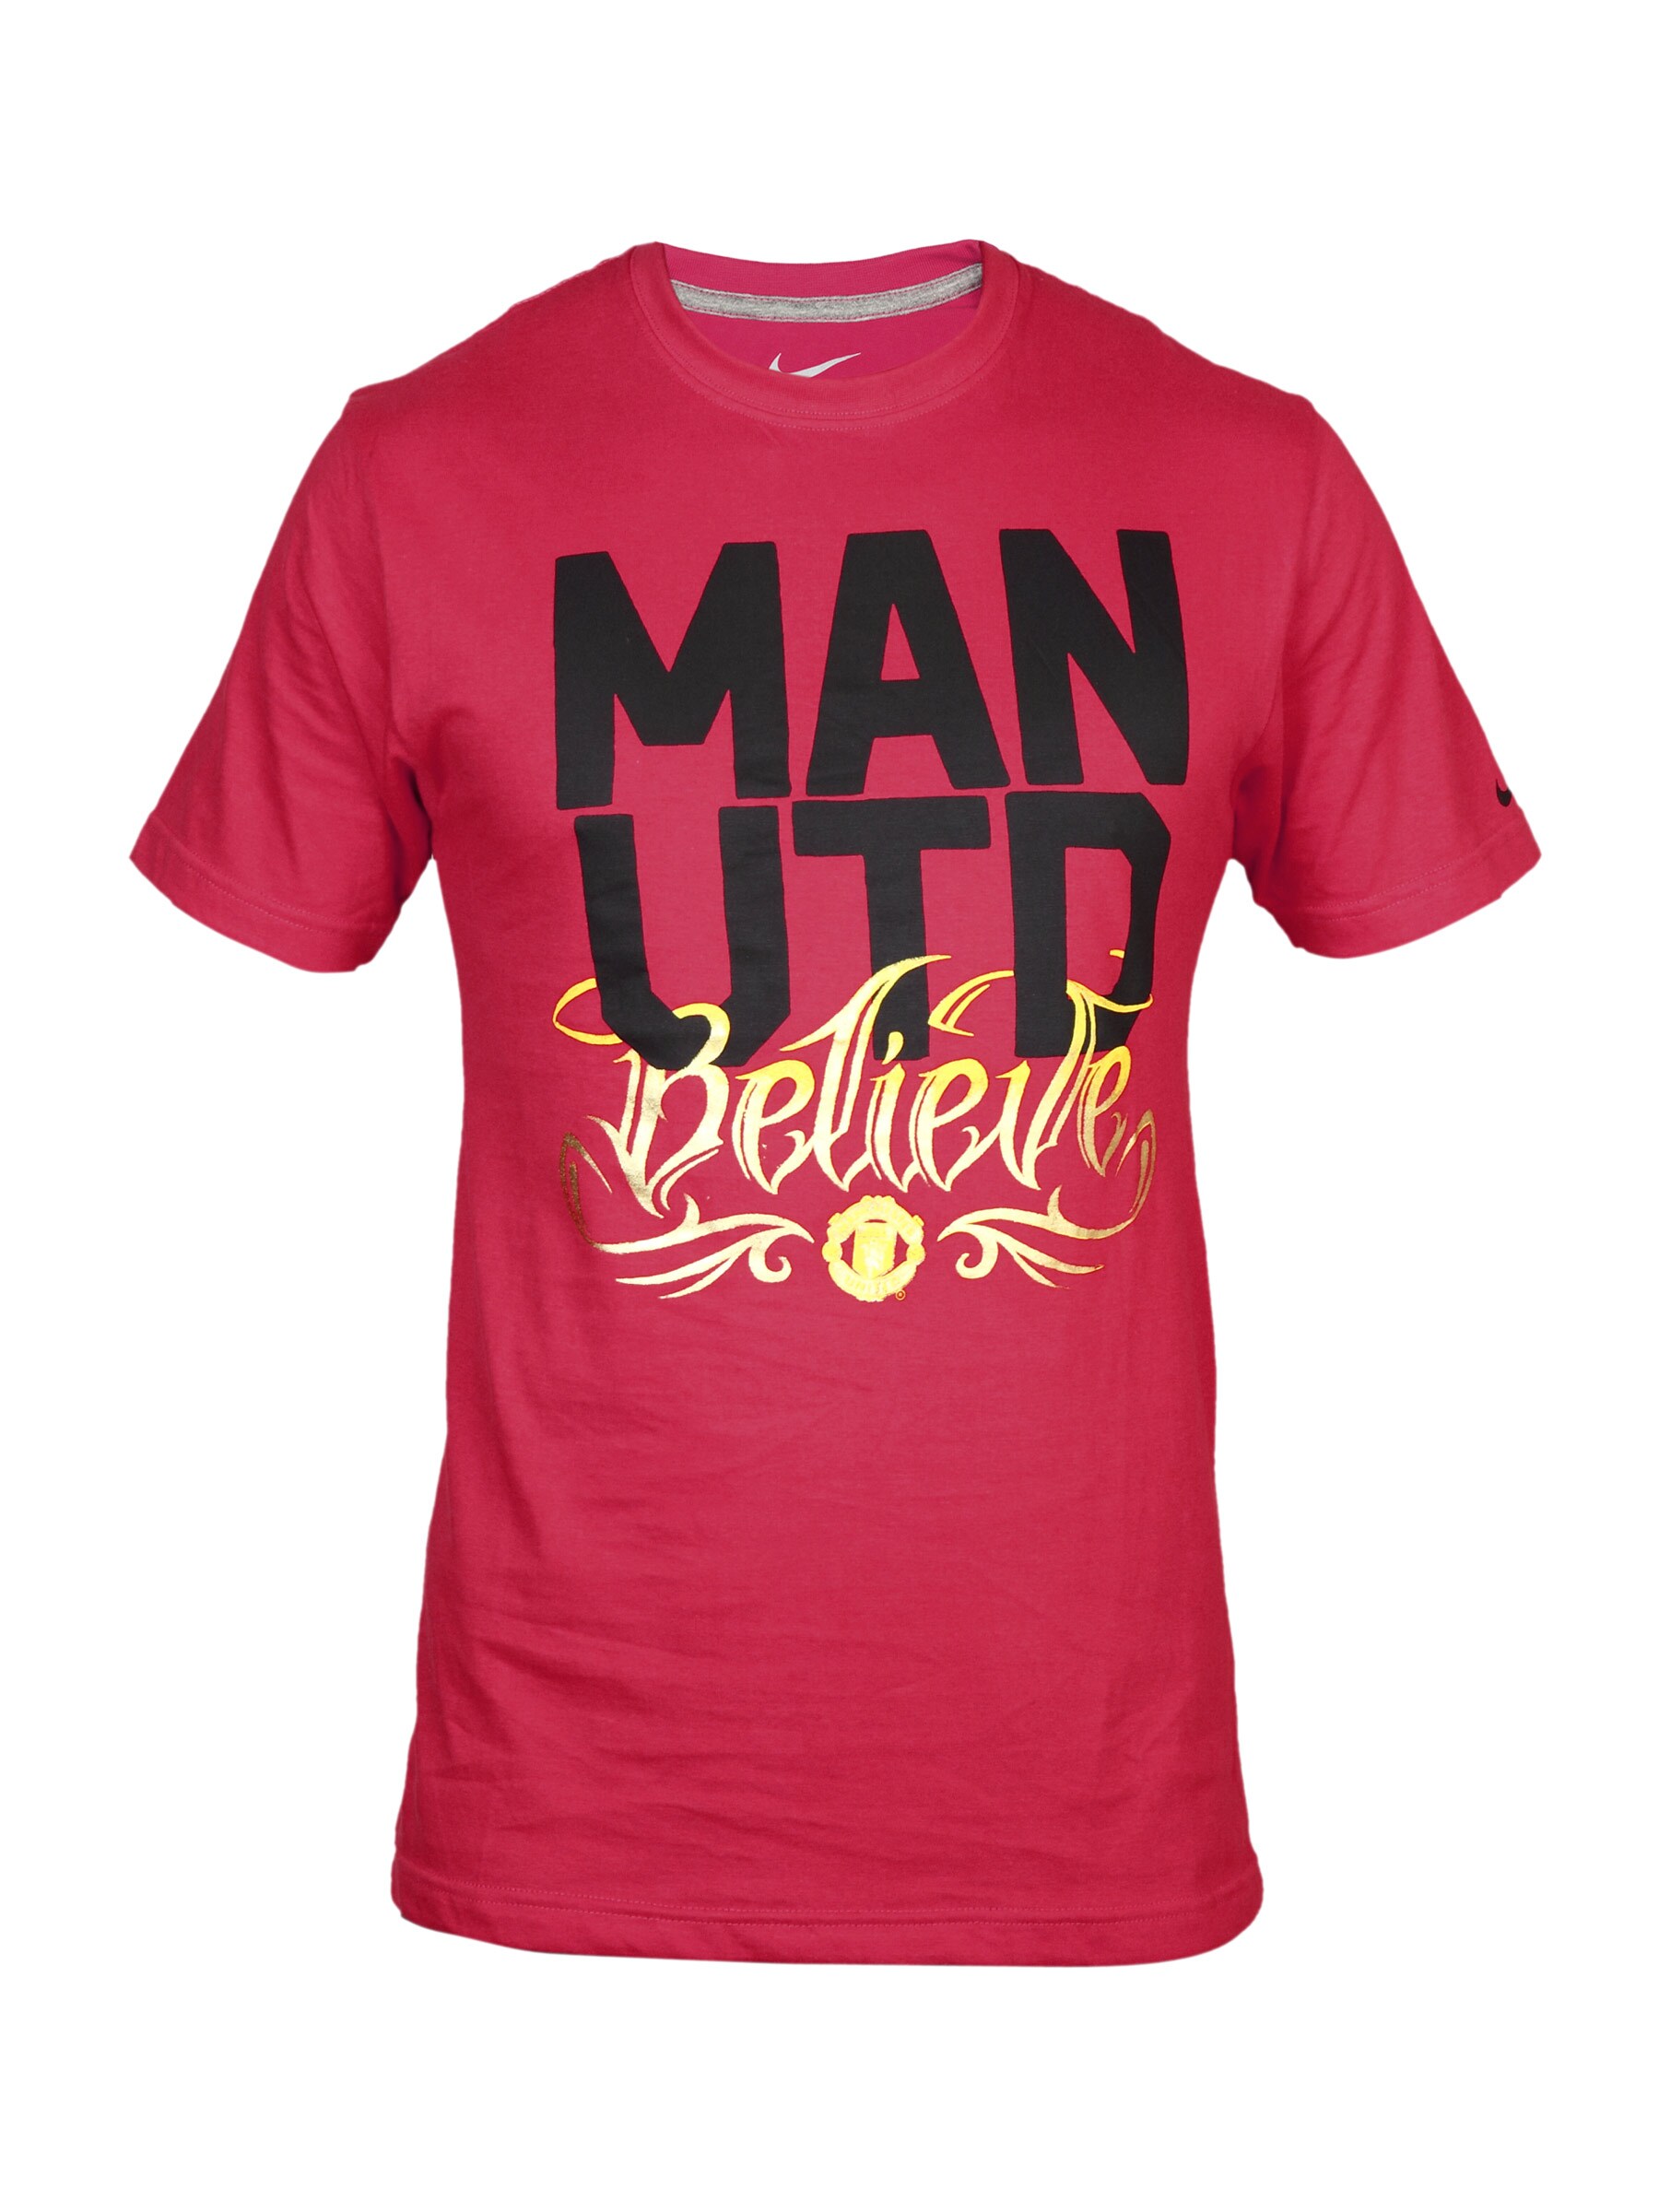 Nike Men's Manchester United Red T-shirt